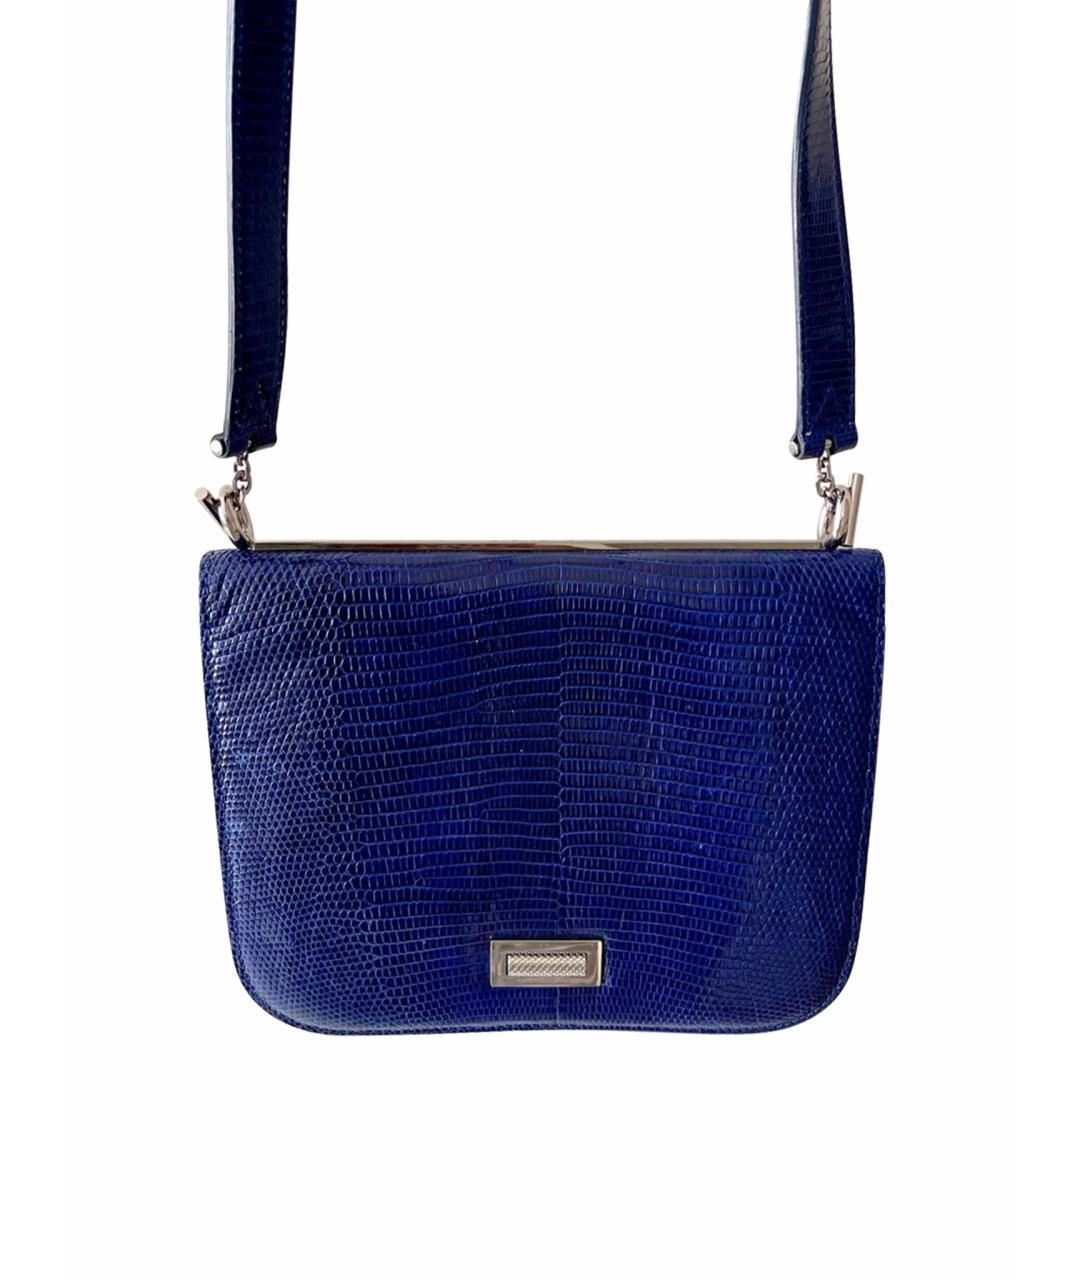 BARBARA BUI Синяя сумка через плечо из экзотической кожи, фото 1